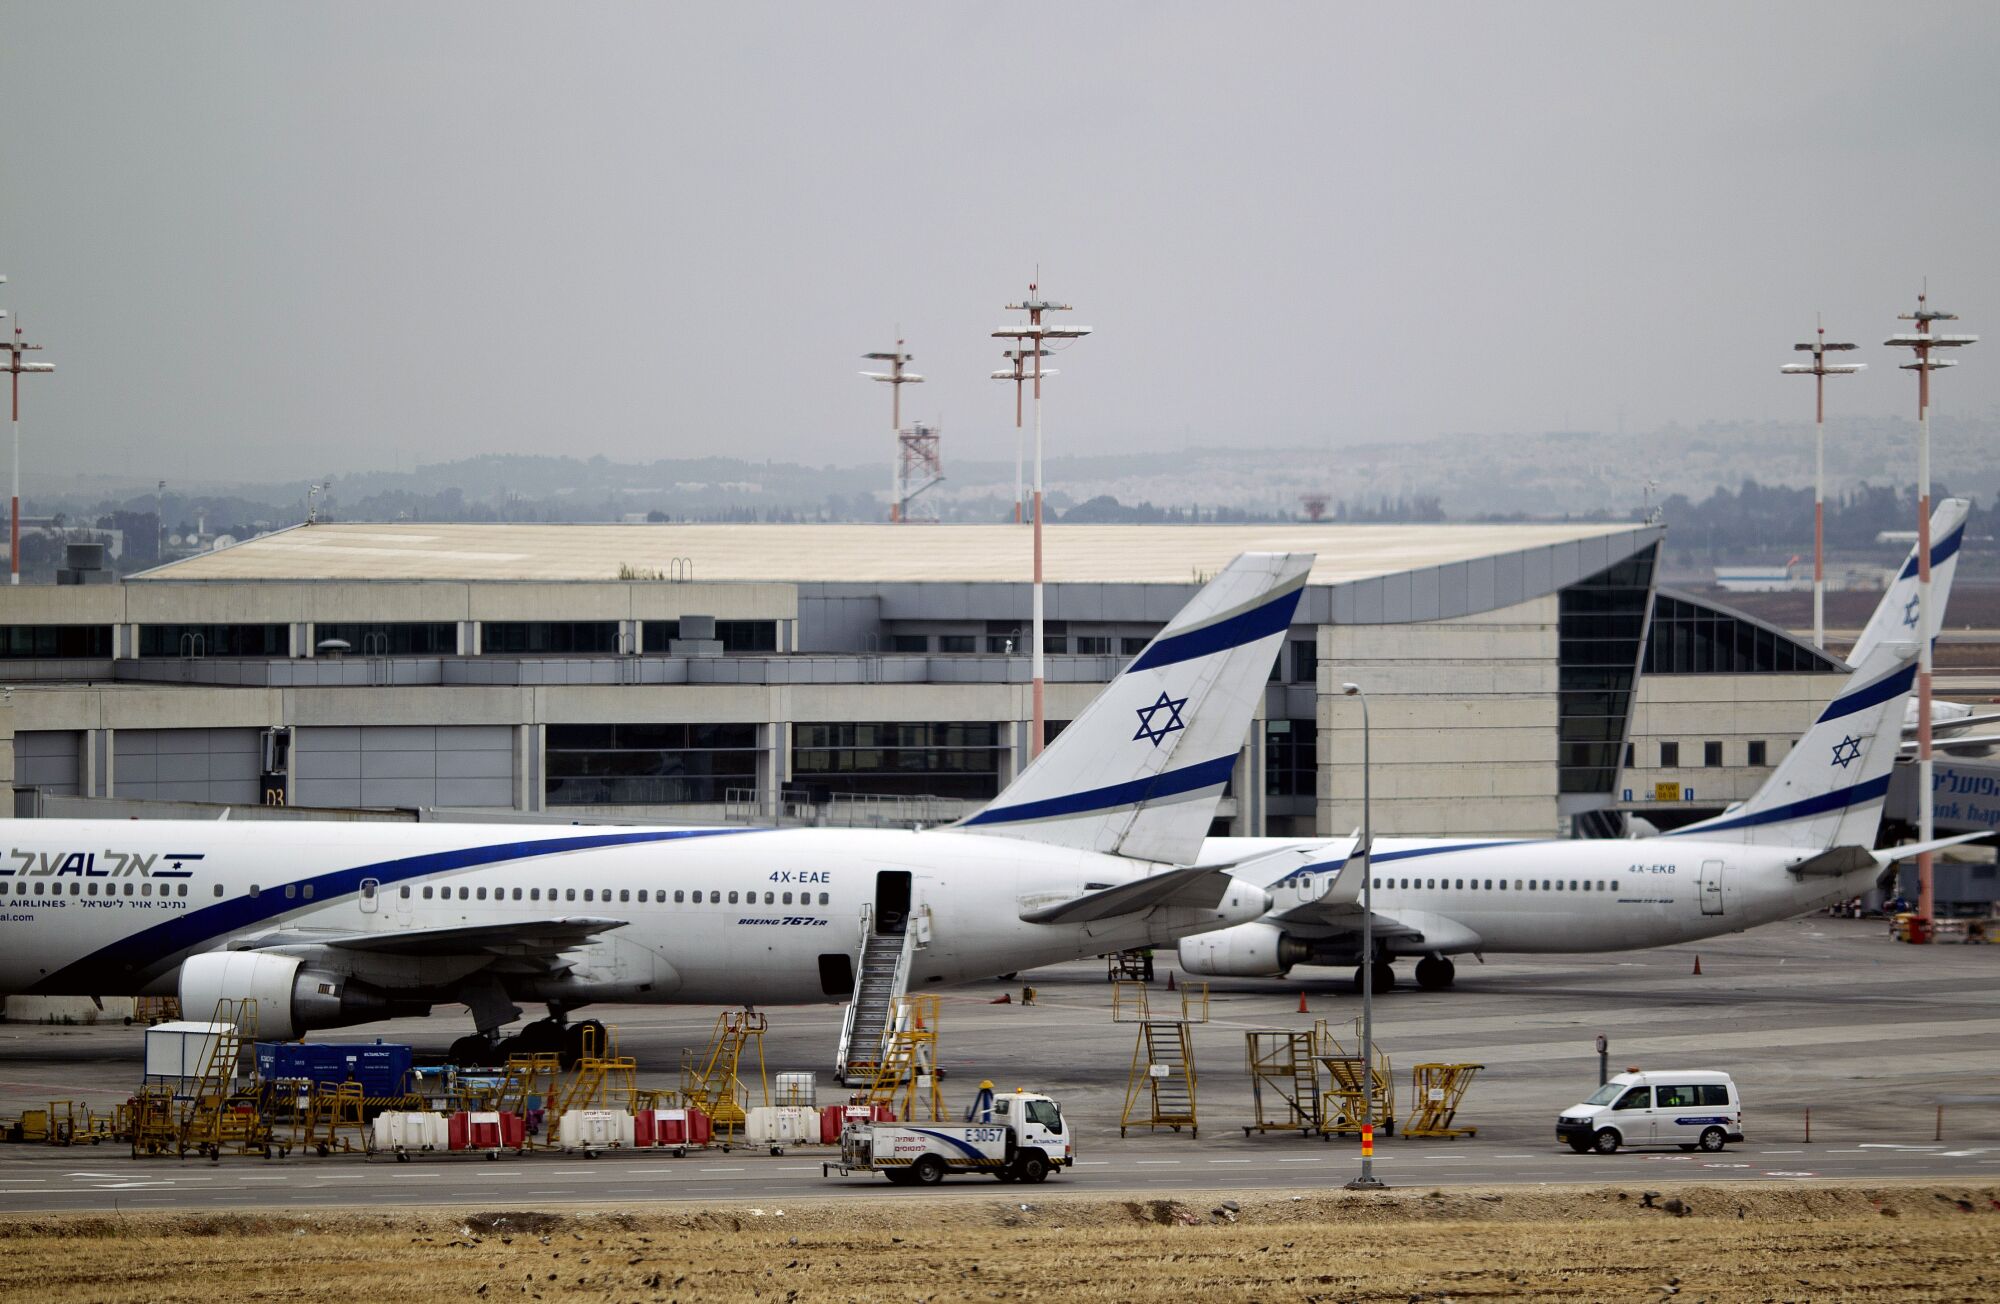 El Al planes at Ben Gurion Airport near Tel Aviv.